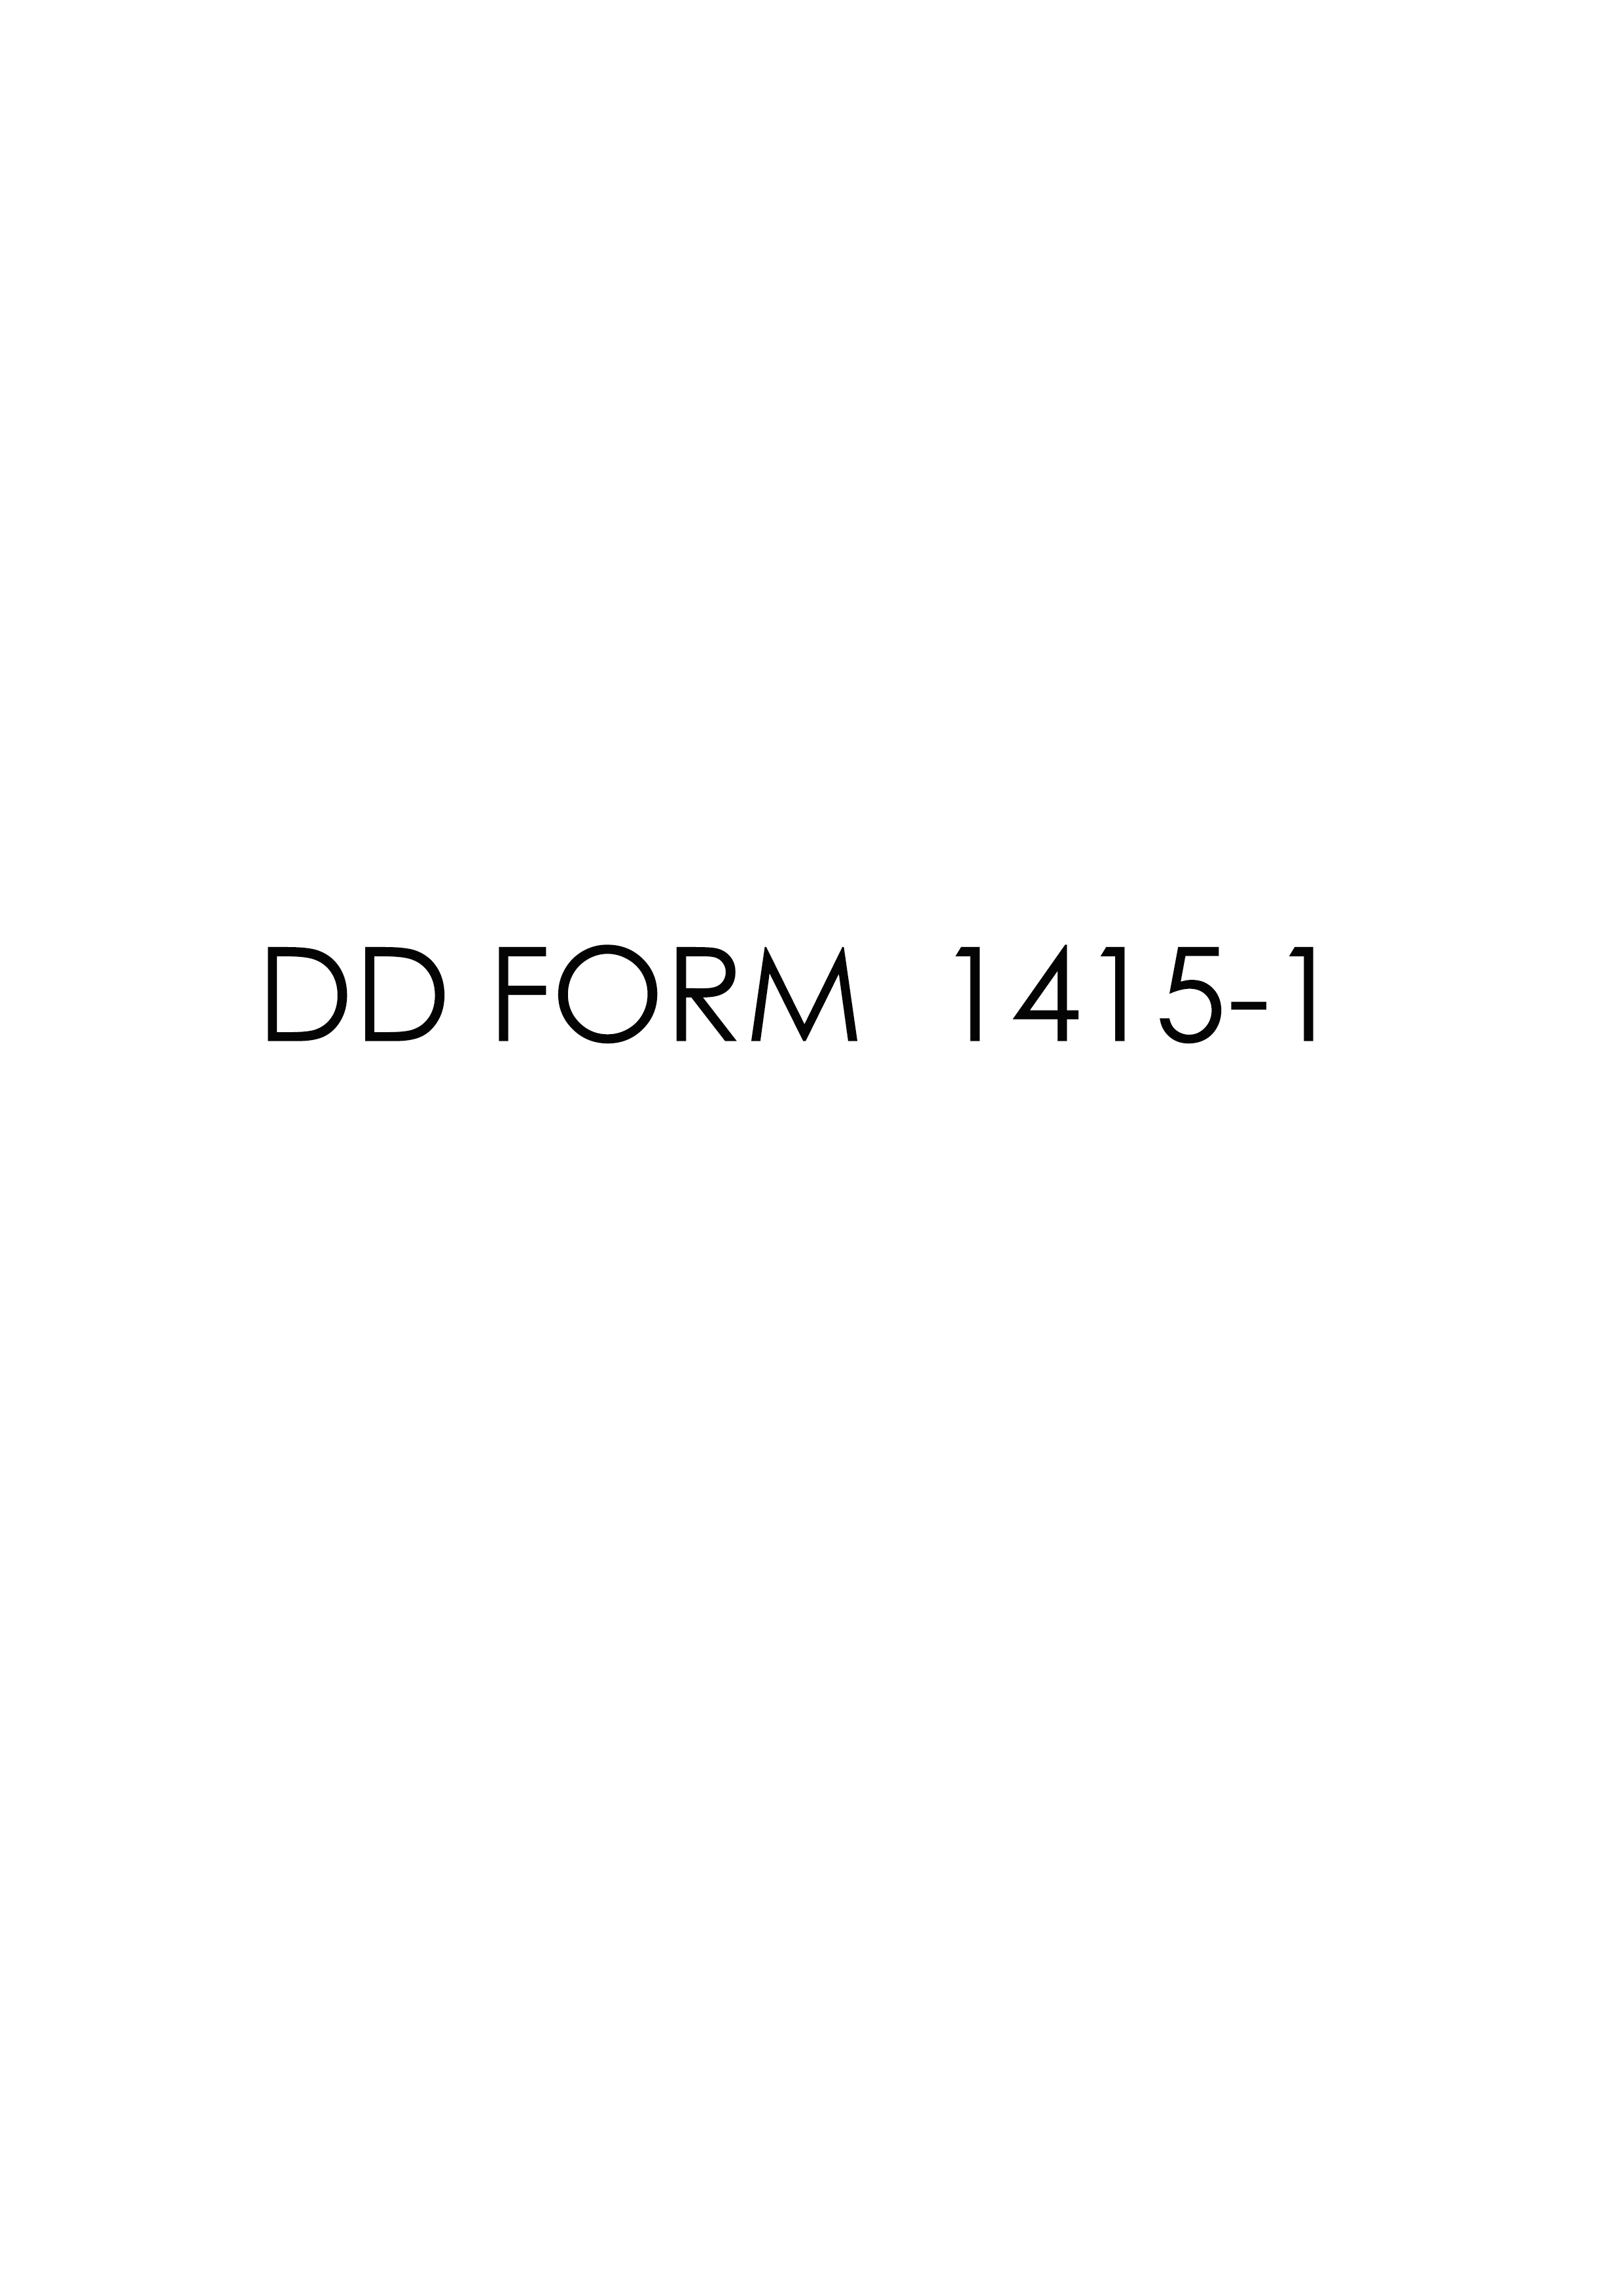 Download dd form 1415-1